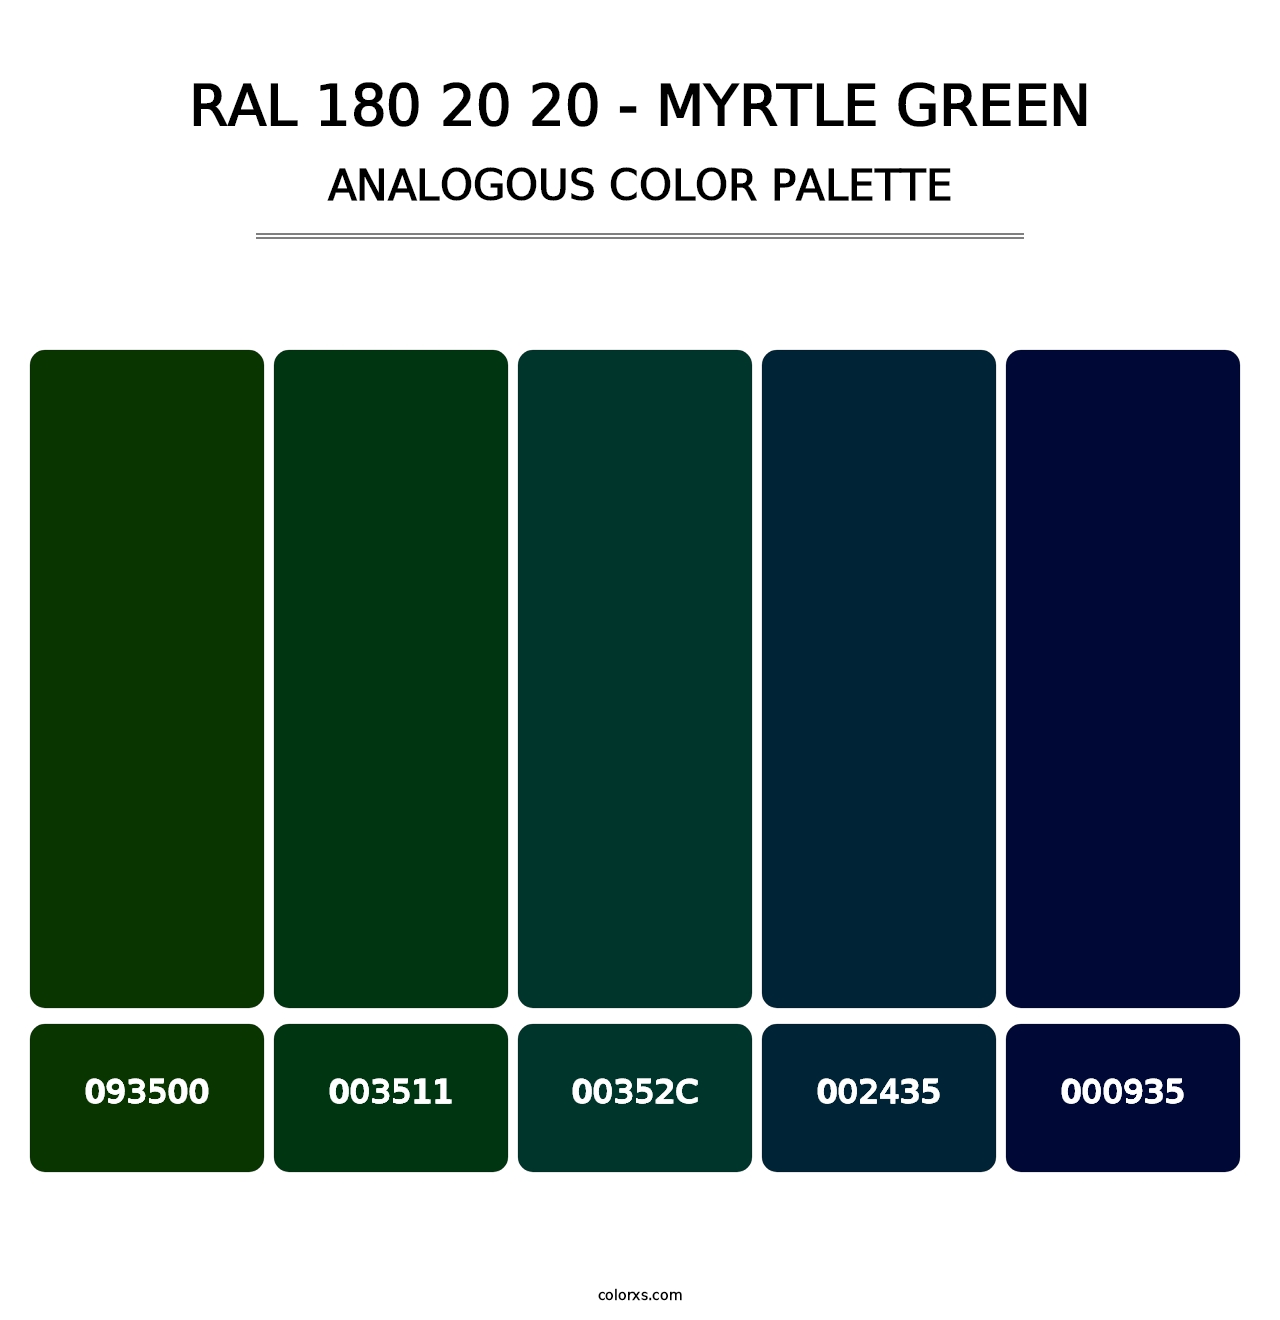 RAL 180 20 20 - Myrtle Green - Analogous Color Palette